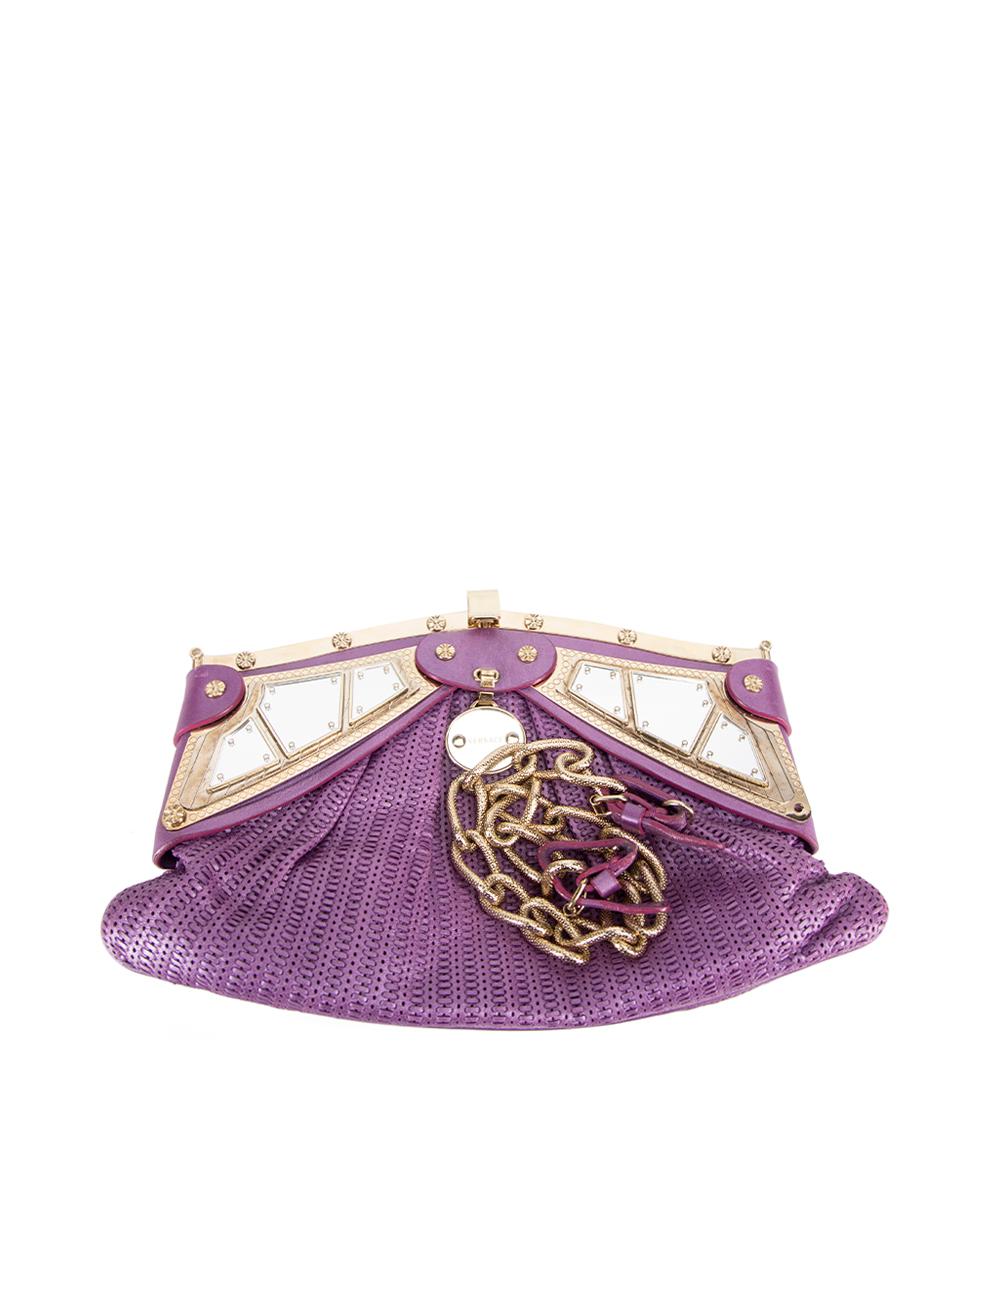 Versace Women's Purple Weave Mirror Frame Chain Bag 2